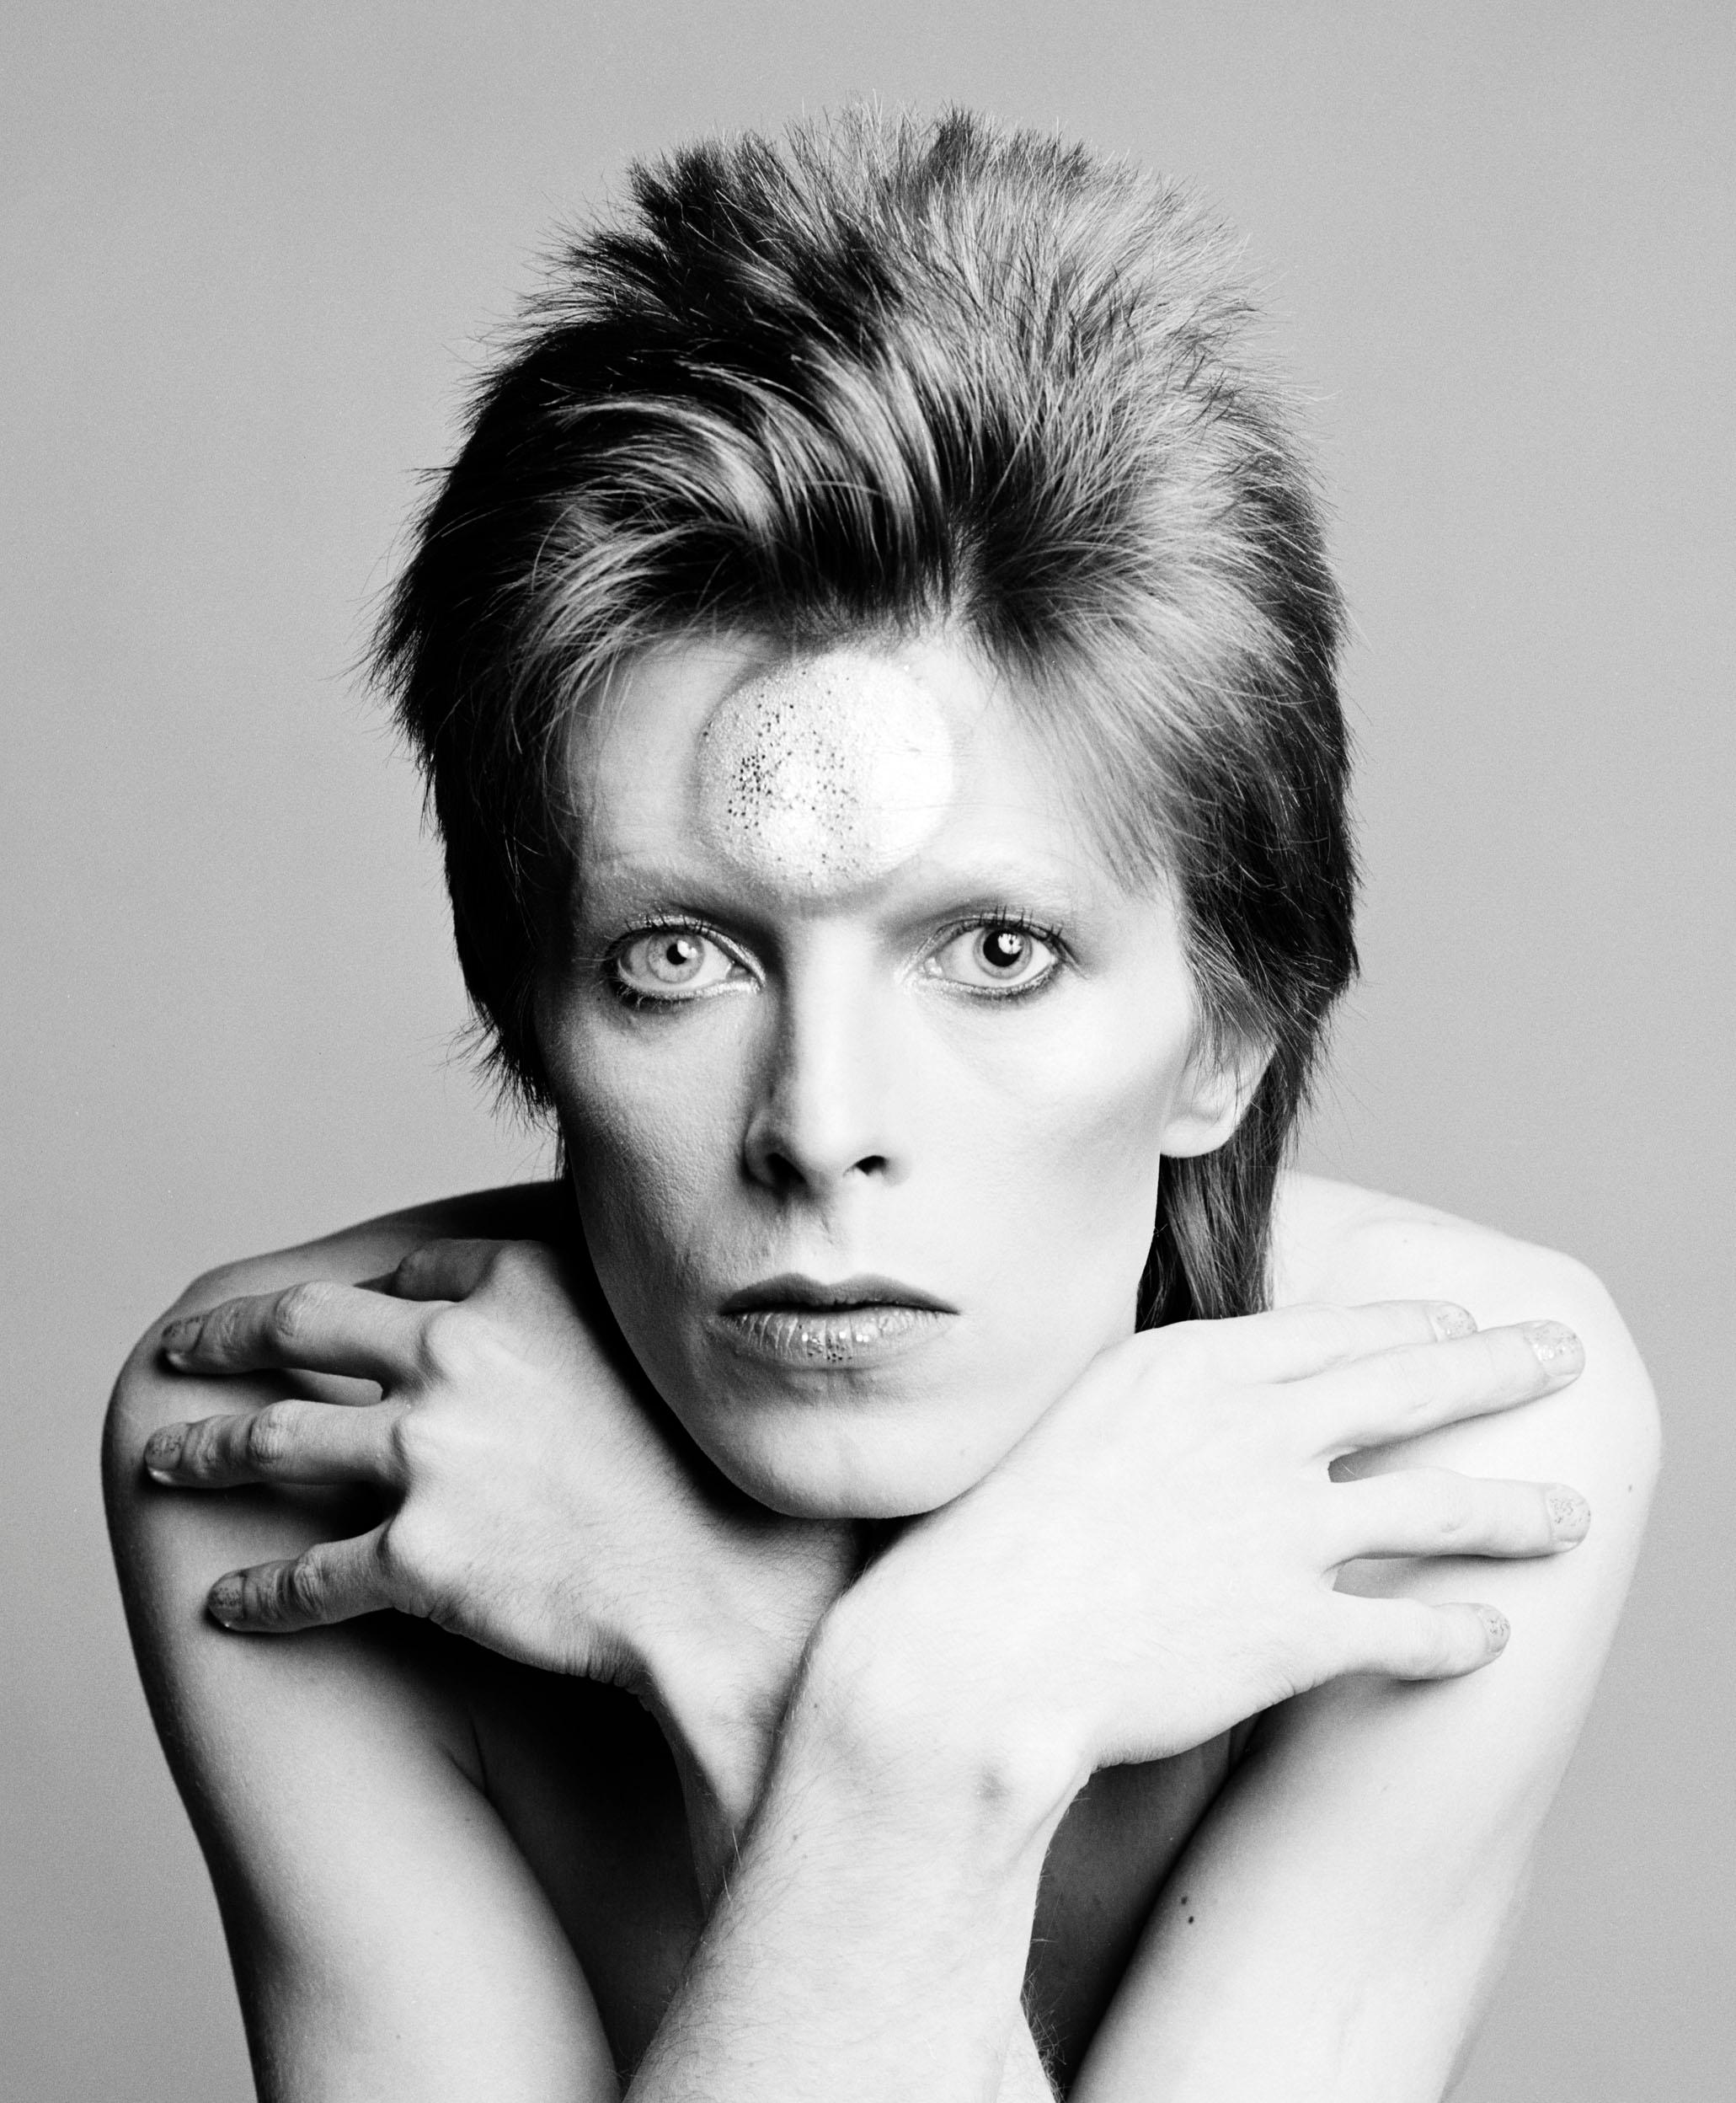 Masayoshi Sukita Portrait Photograph - David Bowie "Loves to be Loved" by Sukita